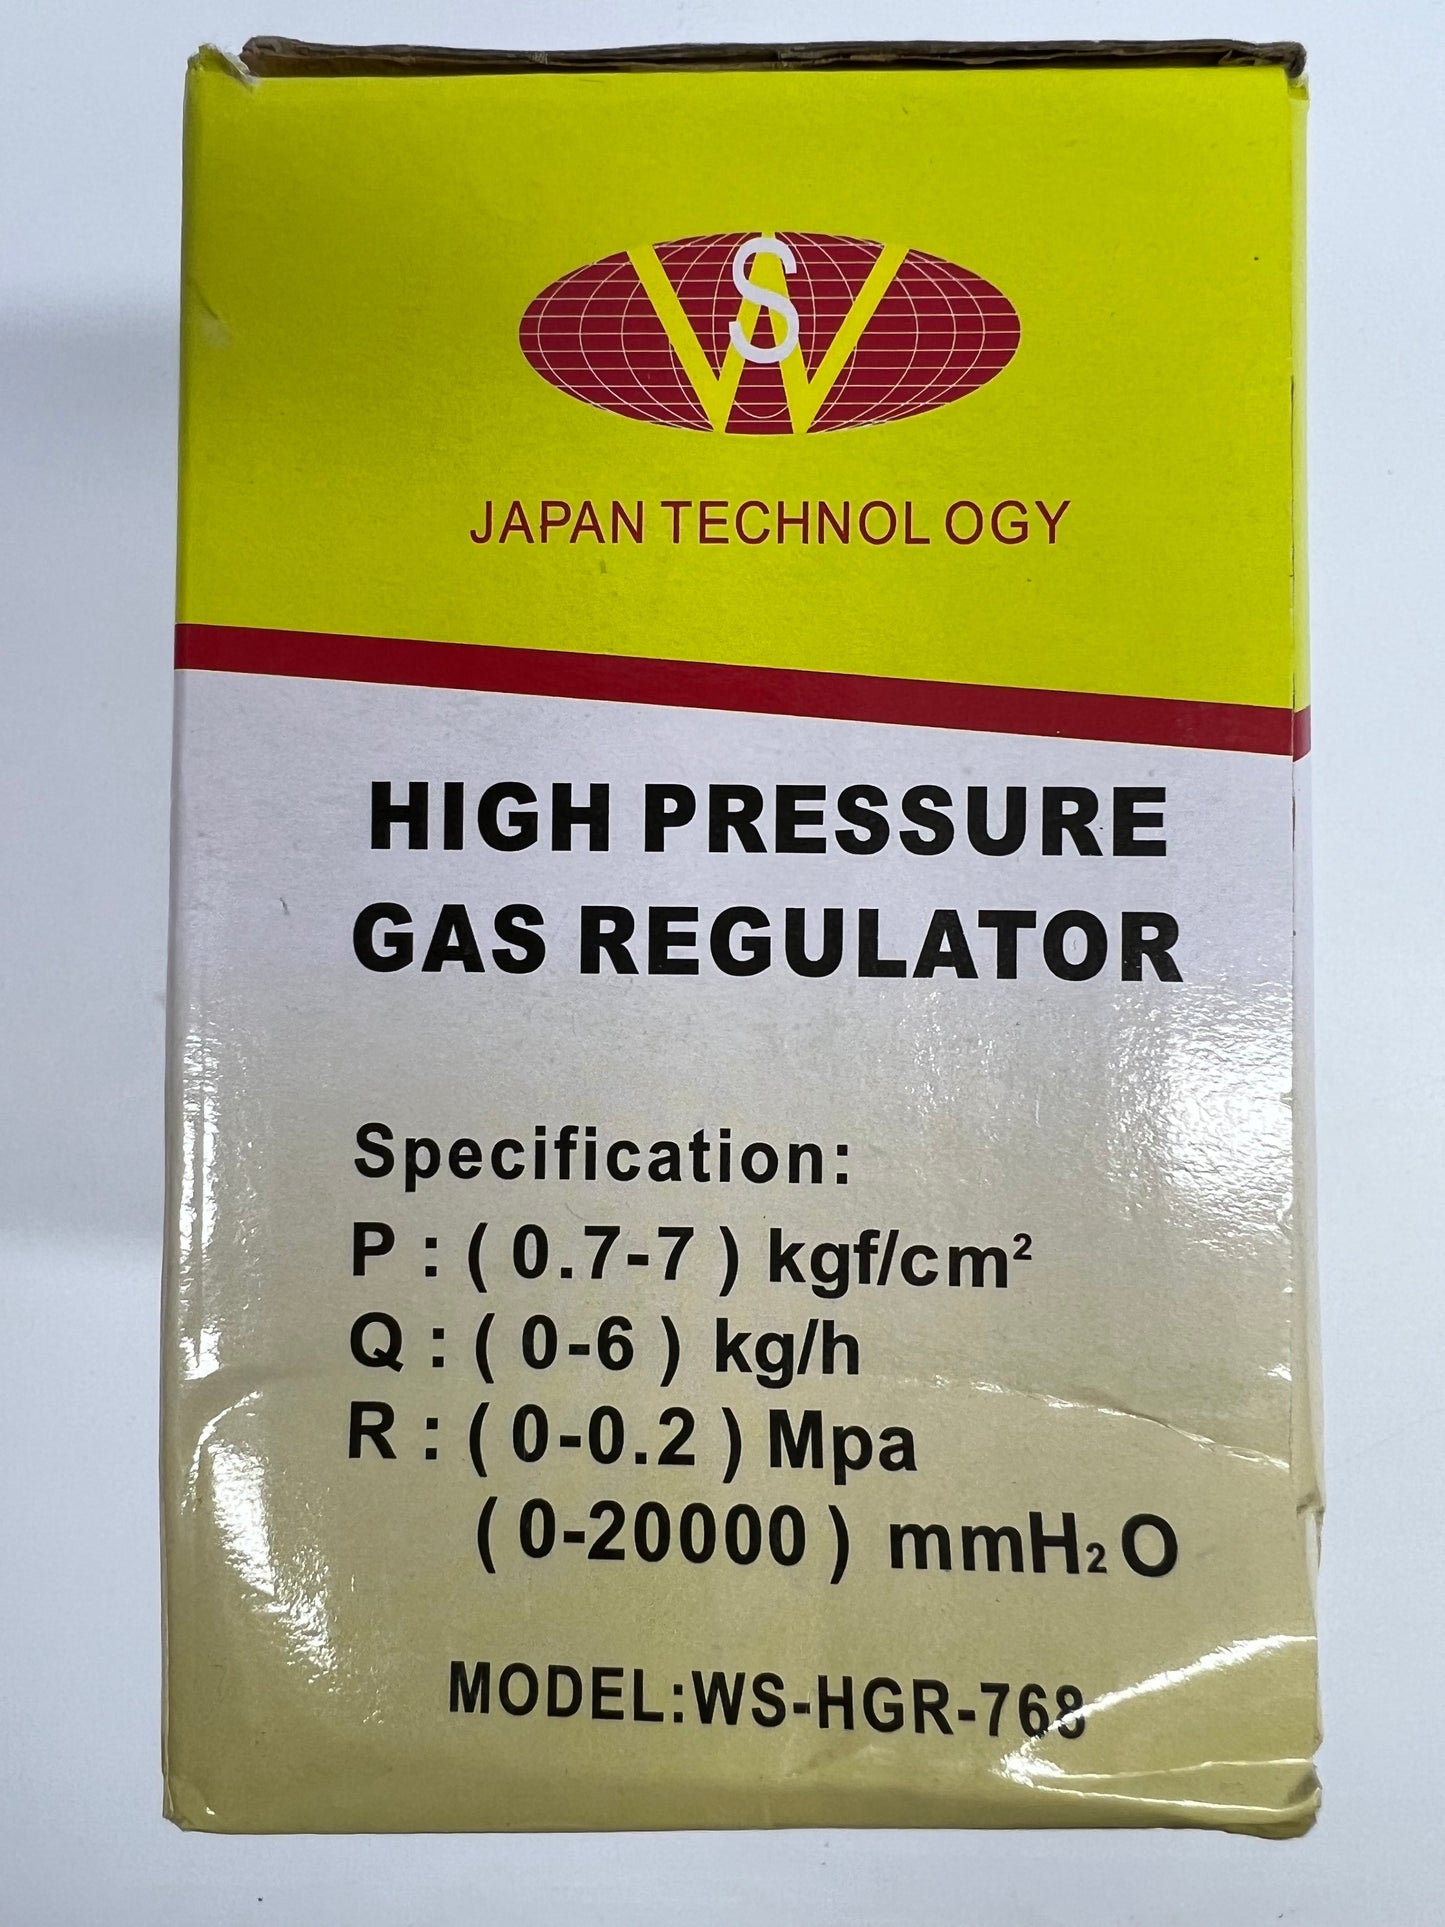 High Pressure Regulator